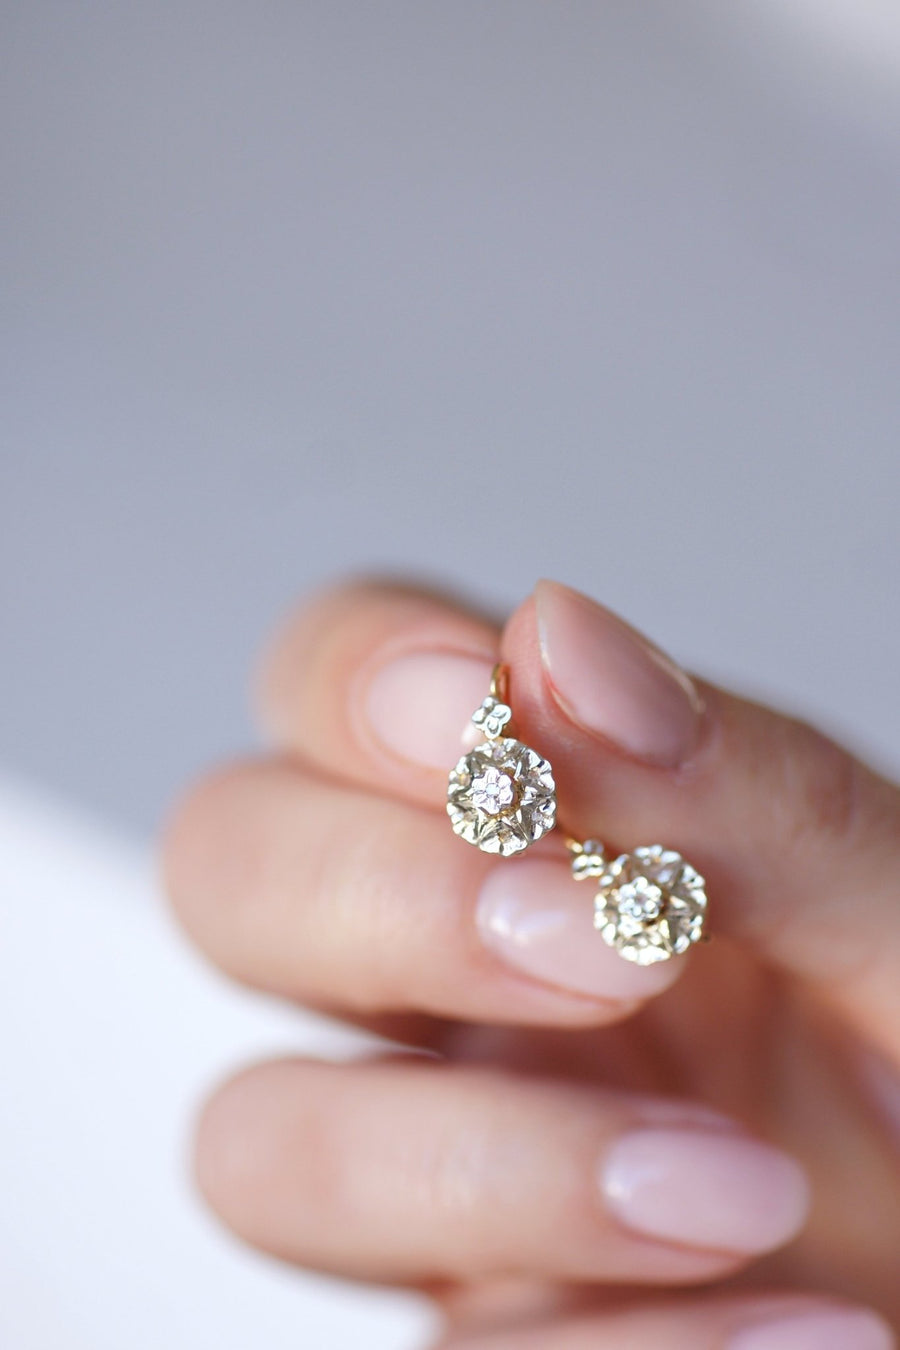 Antique gold and diamond sleeper earrings - Penelope Gallery